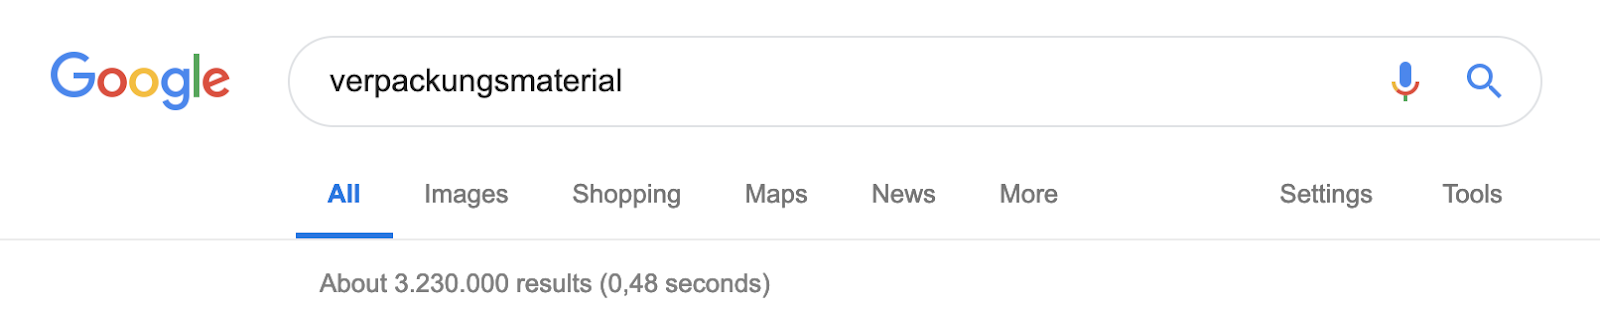 Screenshot showing a Google search query